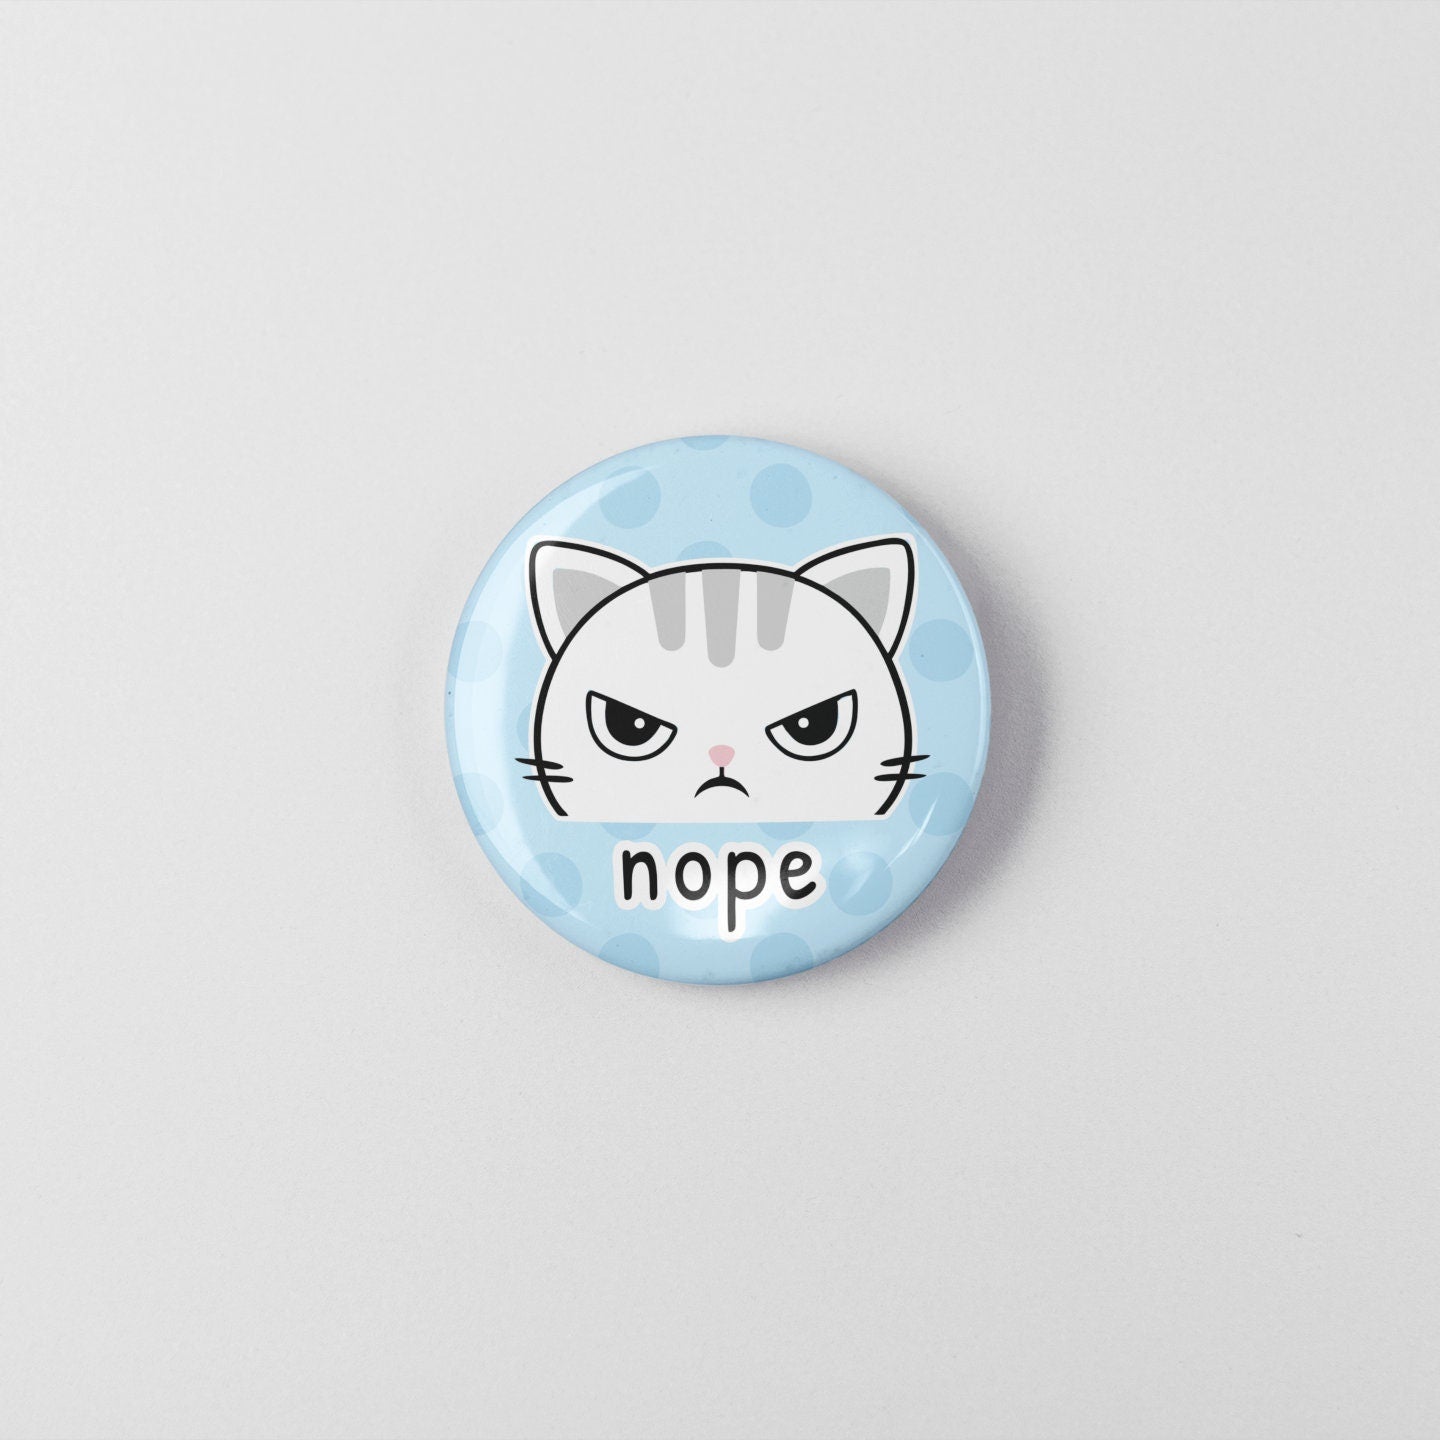 Nope Cat - Badge Pin | Grumpy Cat Button Pin Badge - 38mm Badge - Kawaii Cat